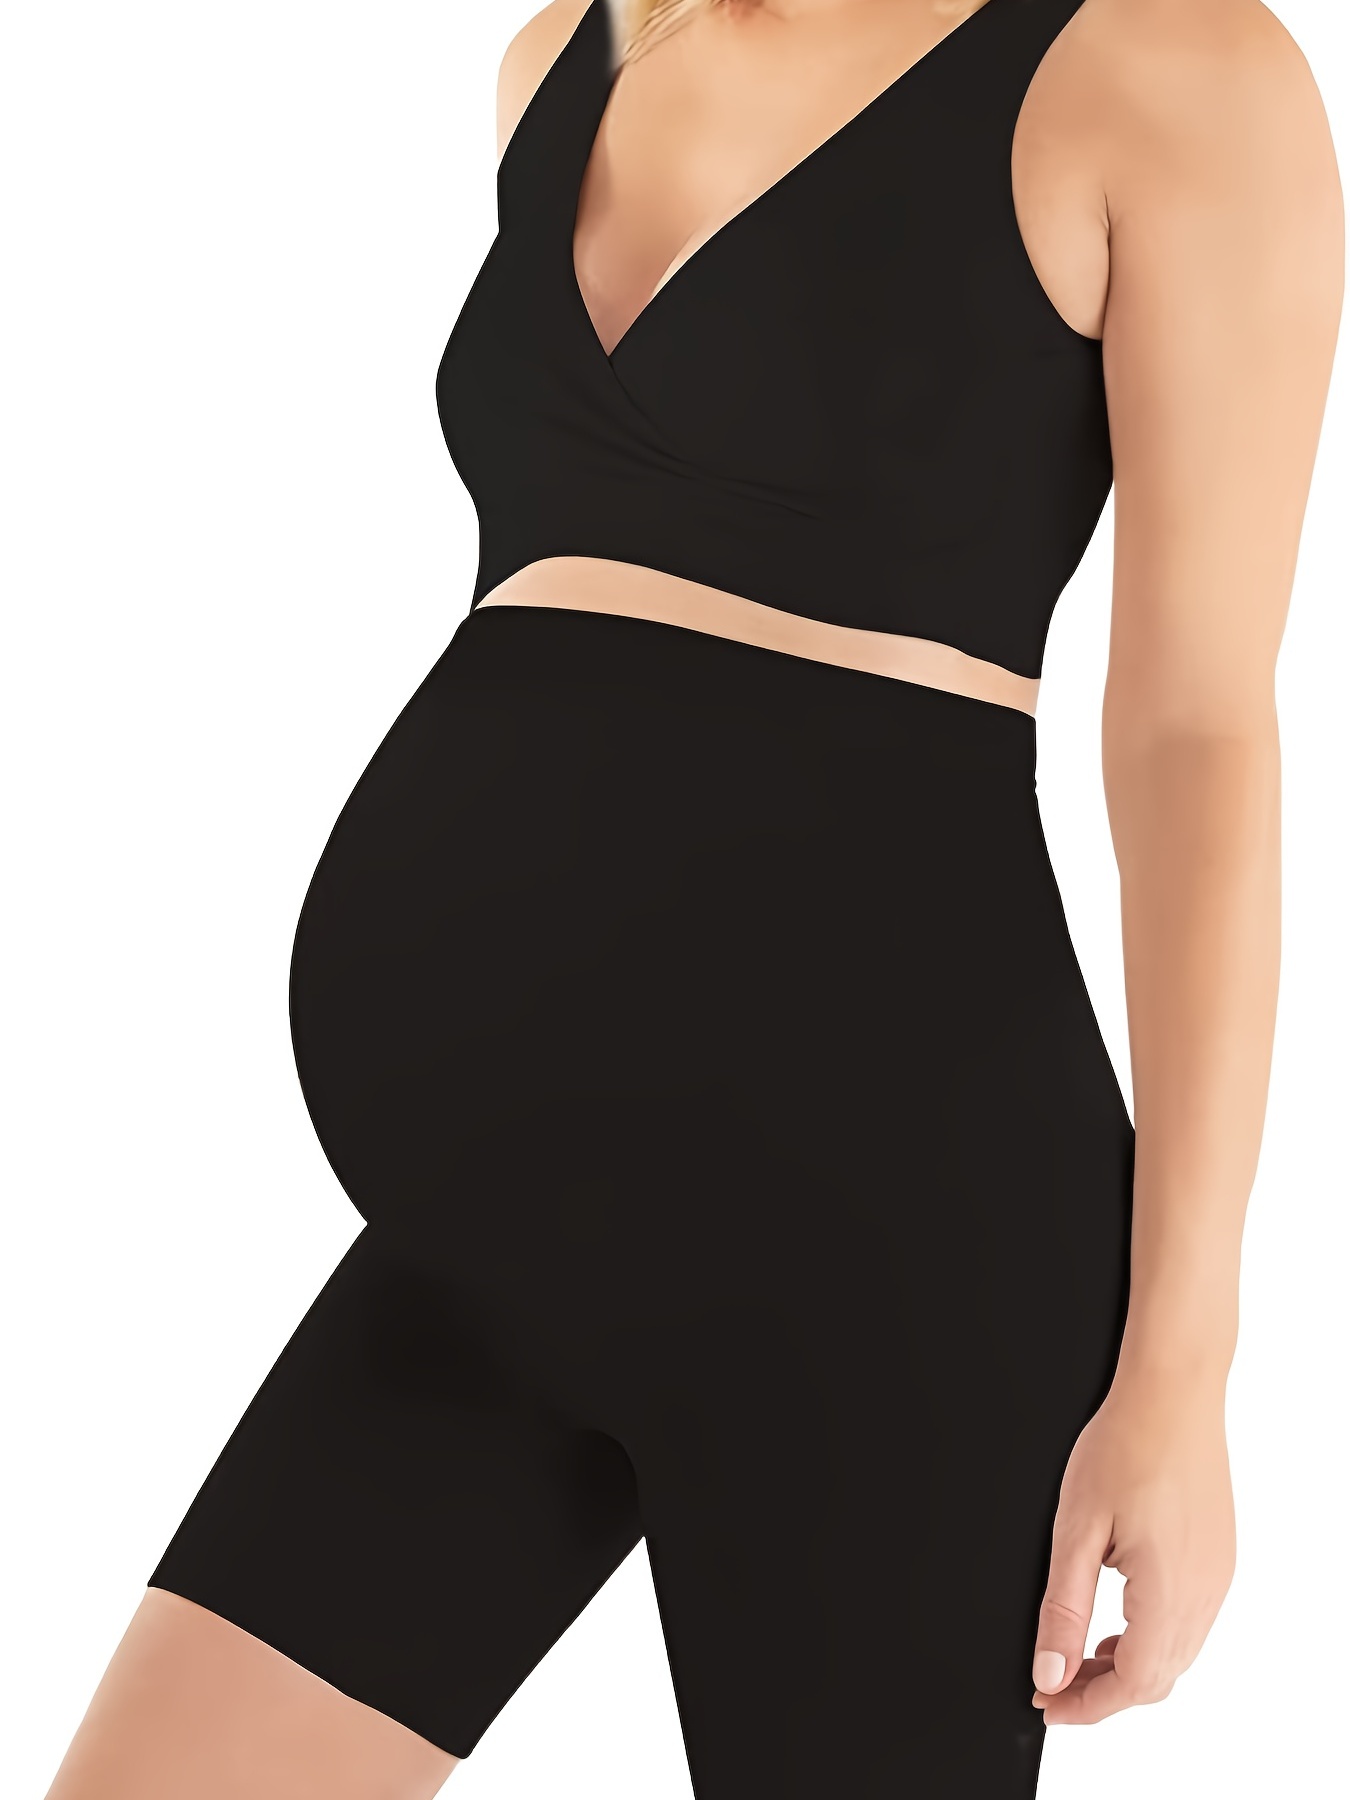 High Waist Shapewear Pregnancy Abdomen Support Panties Maternity Body  Shaper Seamless Slimming Shorts Legging Pants For dress